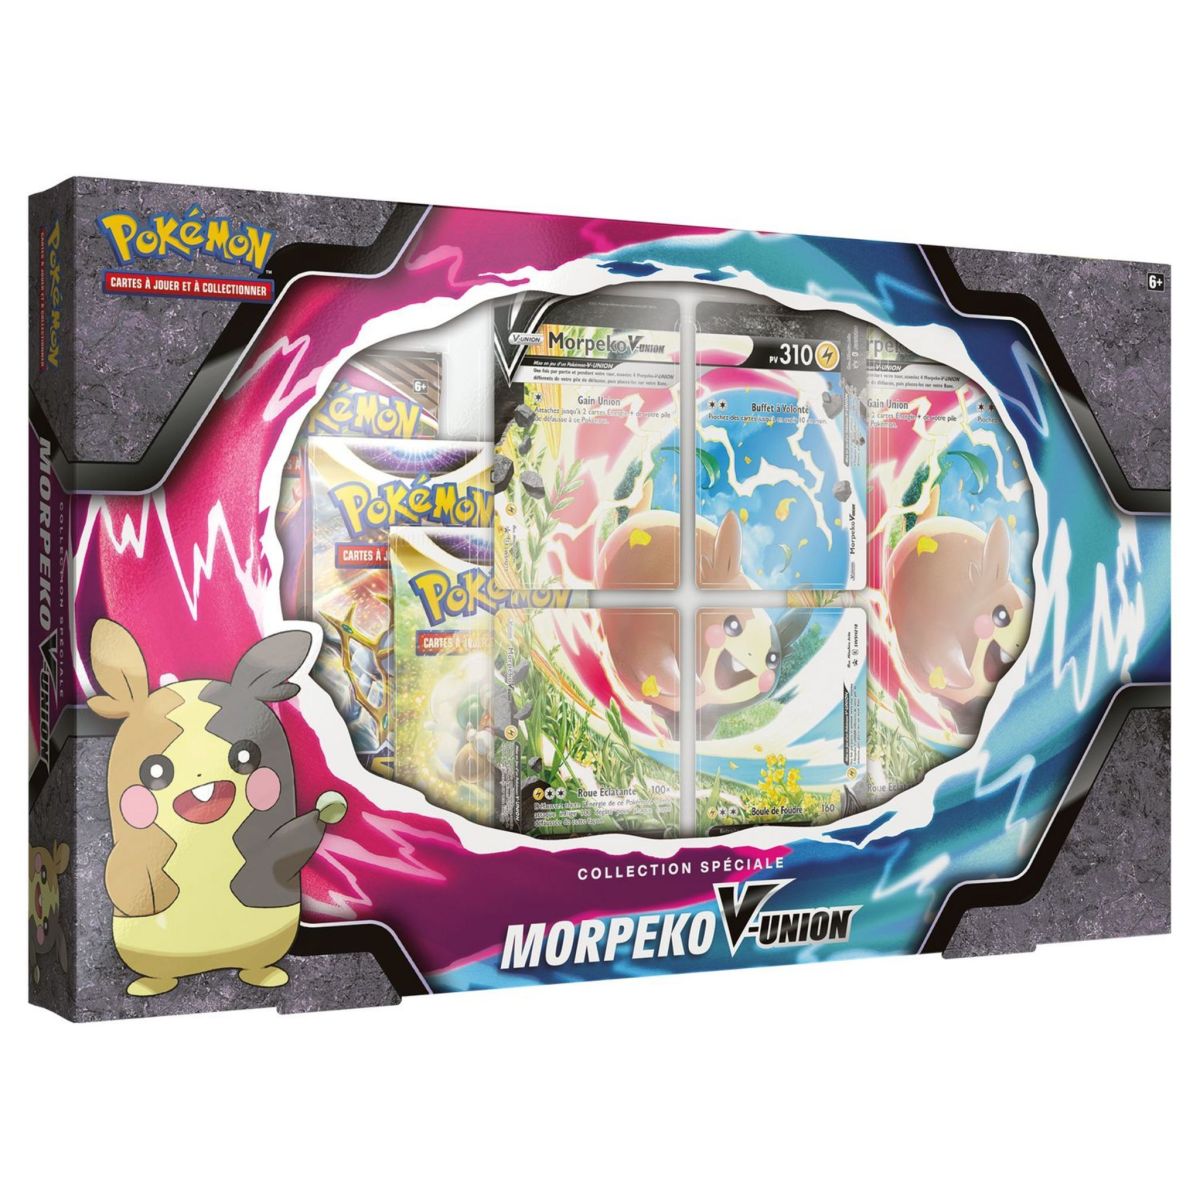 Pokémon - Special Collection Box - Morpeko V-Union - FR